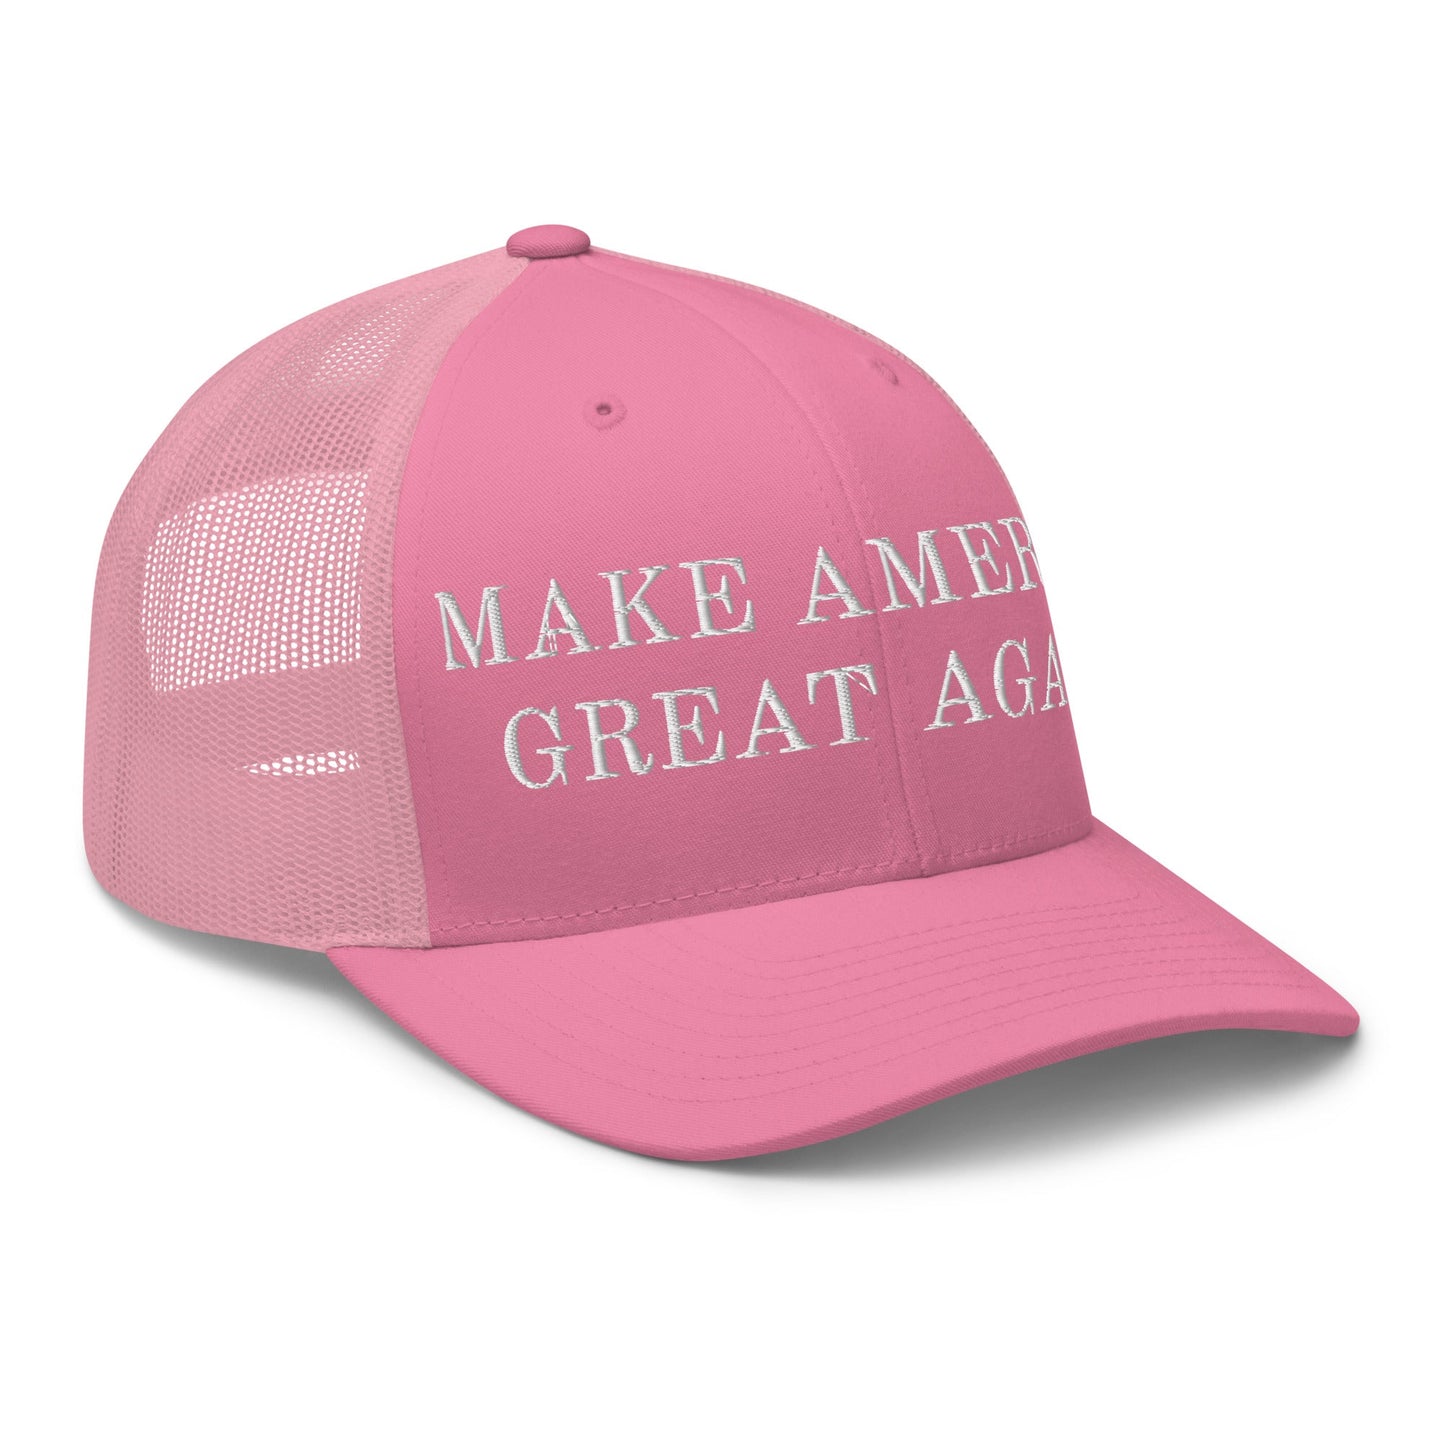 Make America Great Again MAGA Retro Trucker Snapback Hat Pink